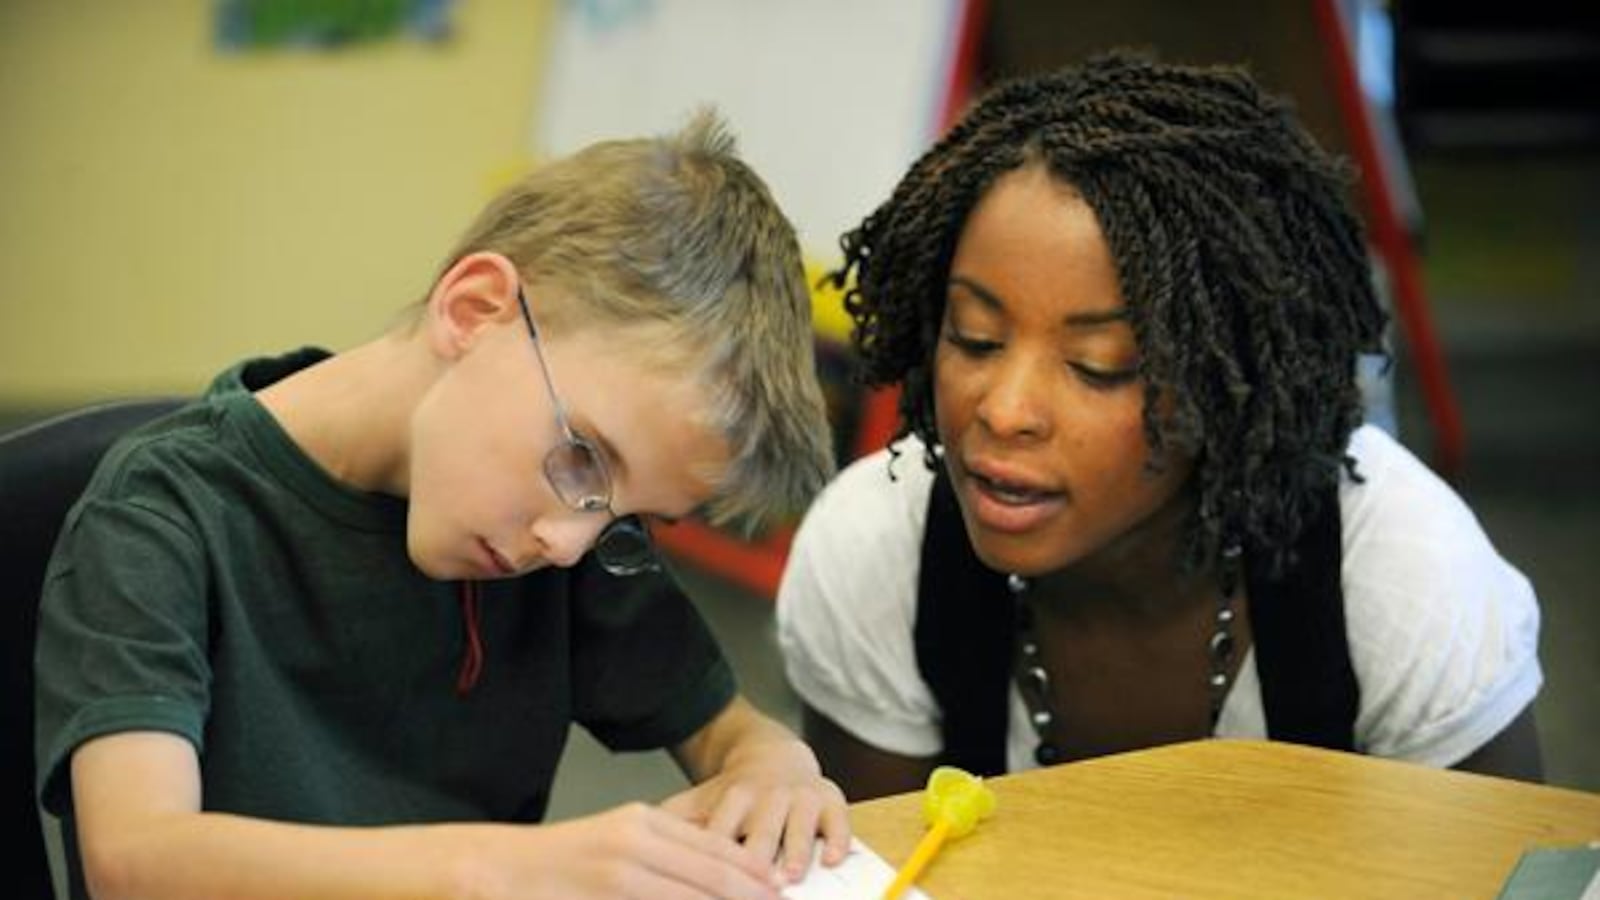 A teacher helps a student who has cerebral palsy.